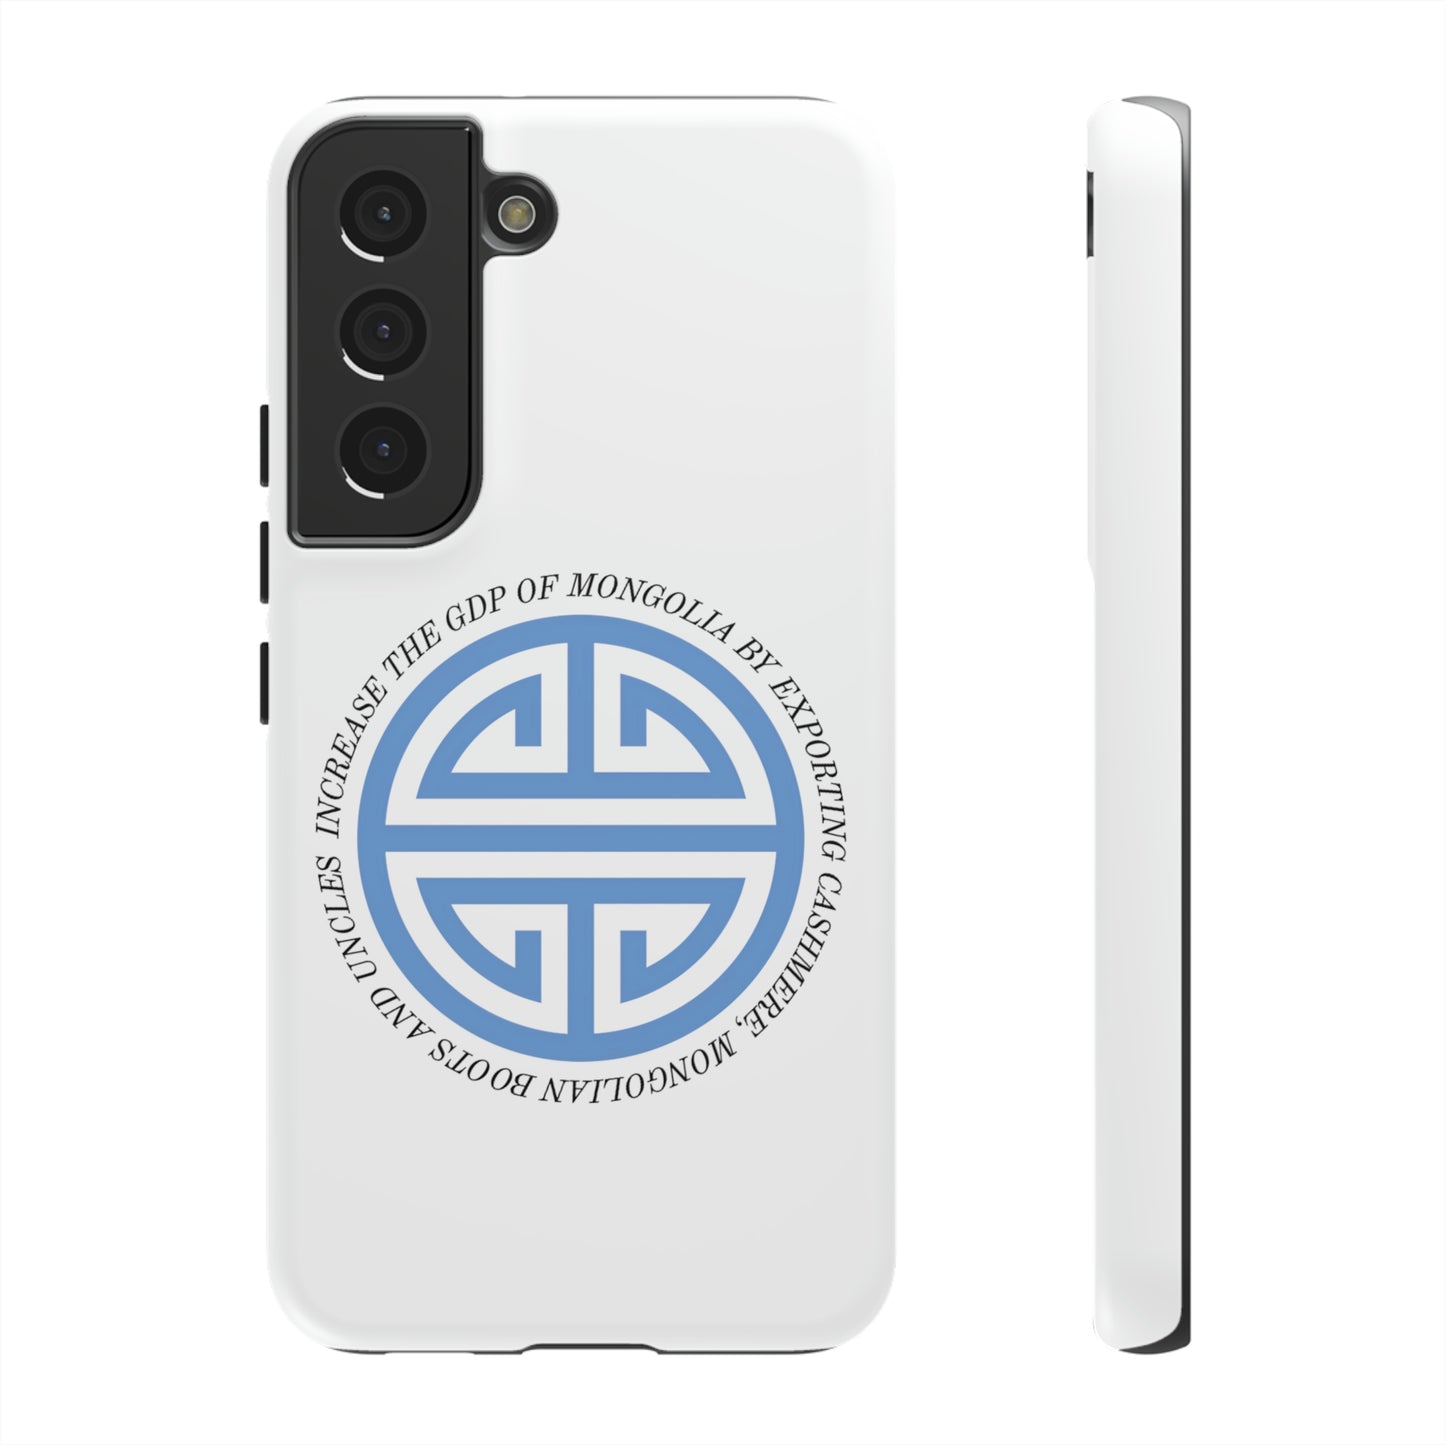 mongolian-gdp-phone-case